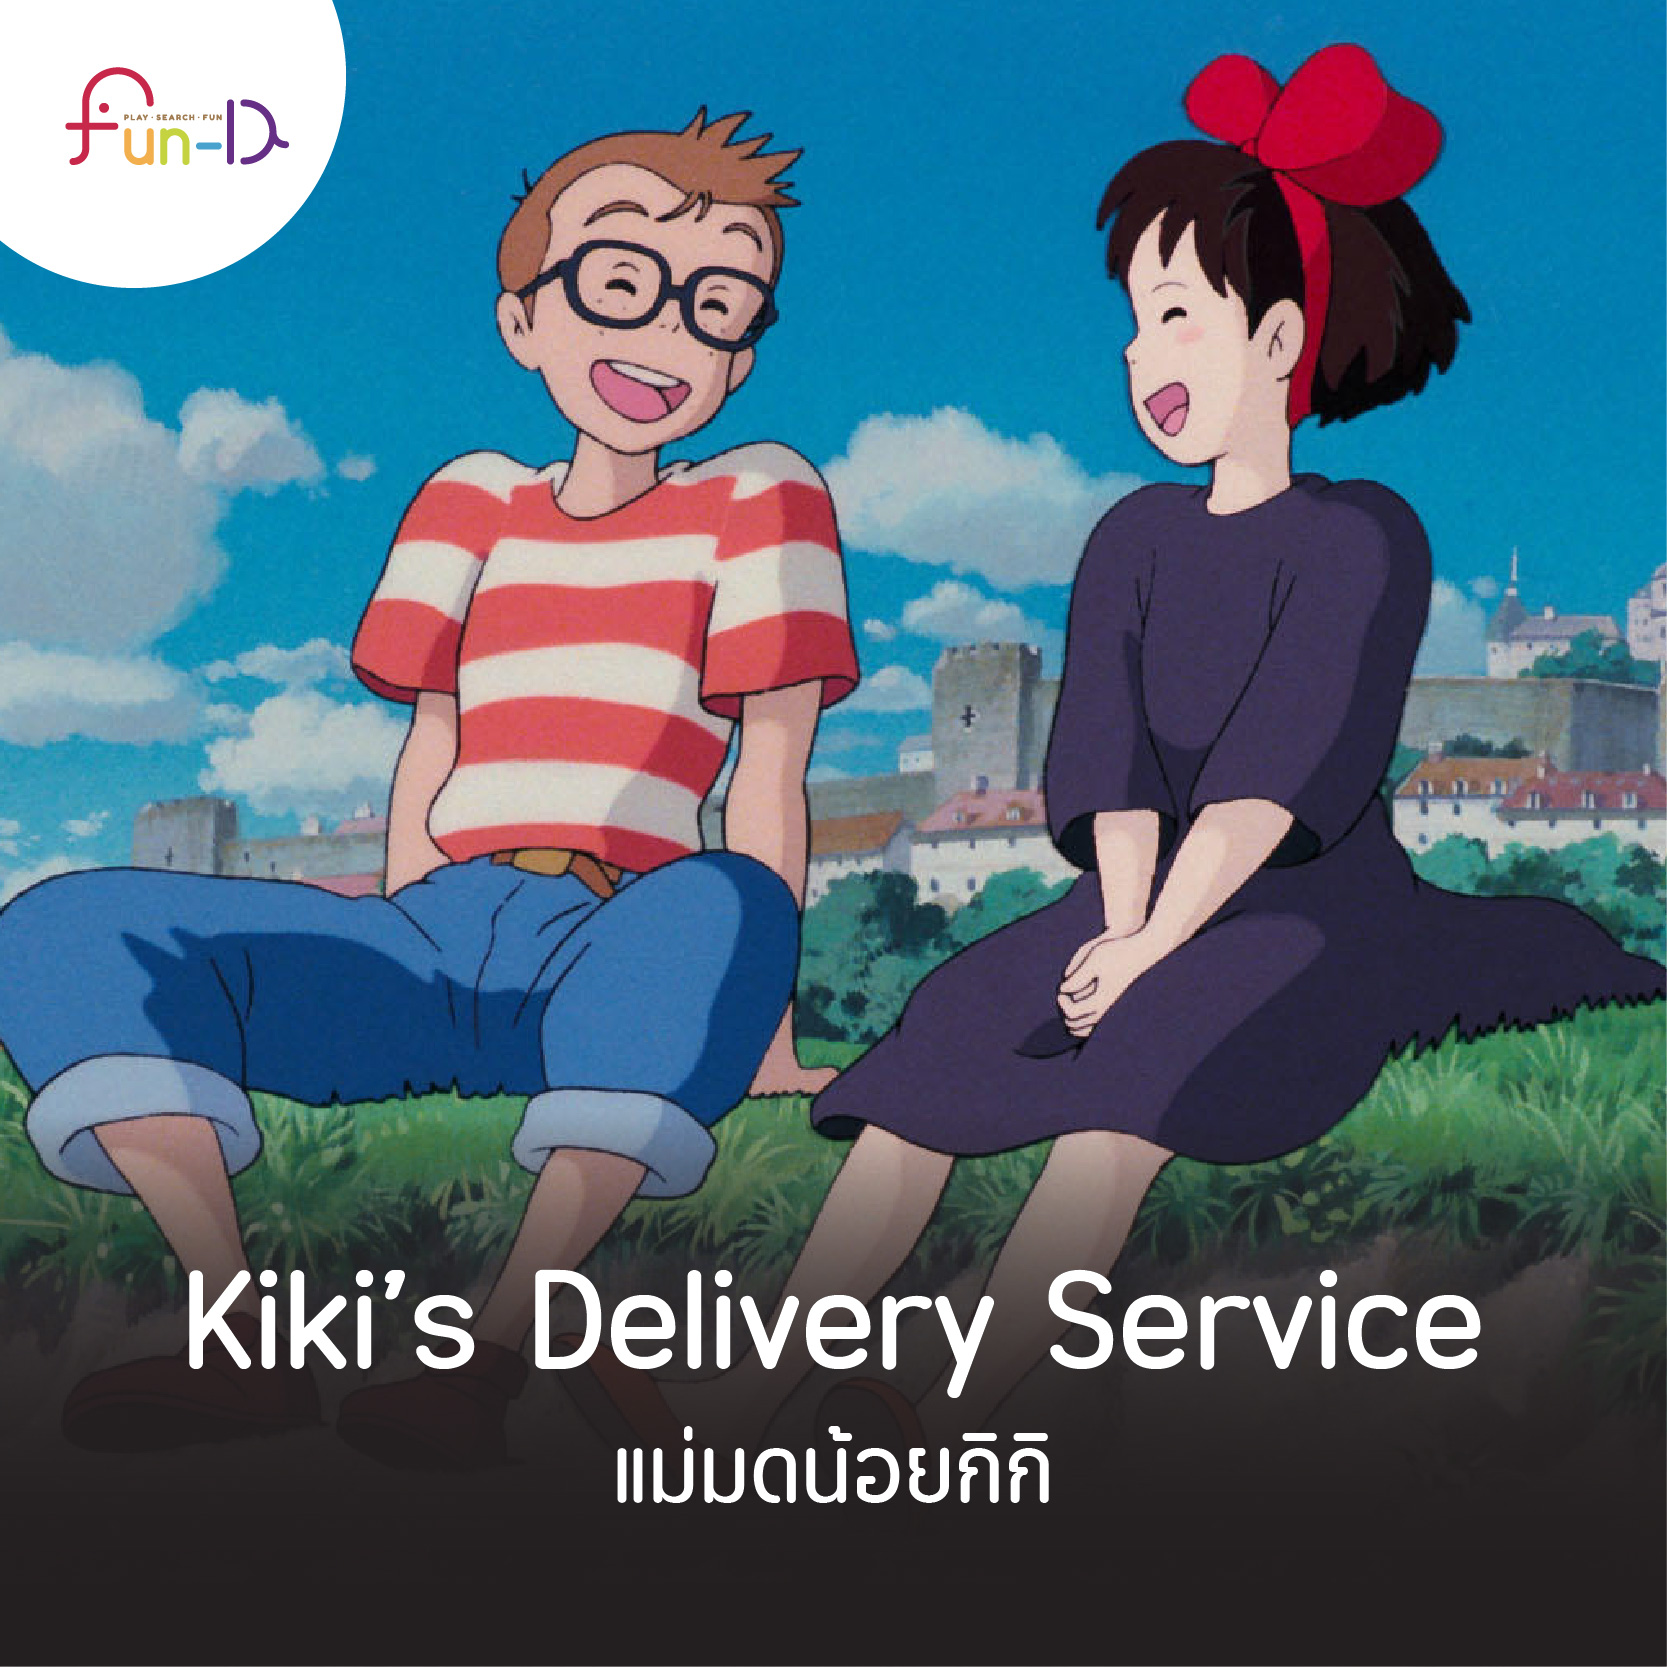 Kiki’s Delivery Service แม่มดน้อยกิกิ